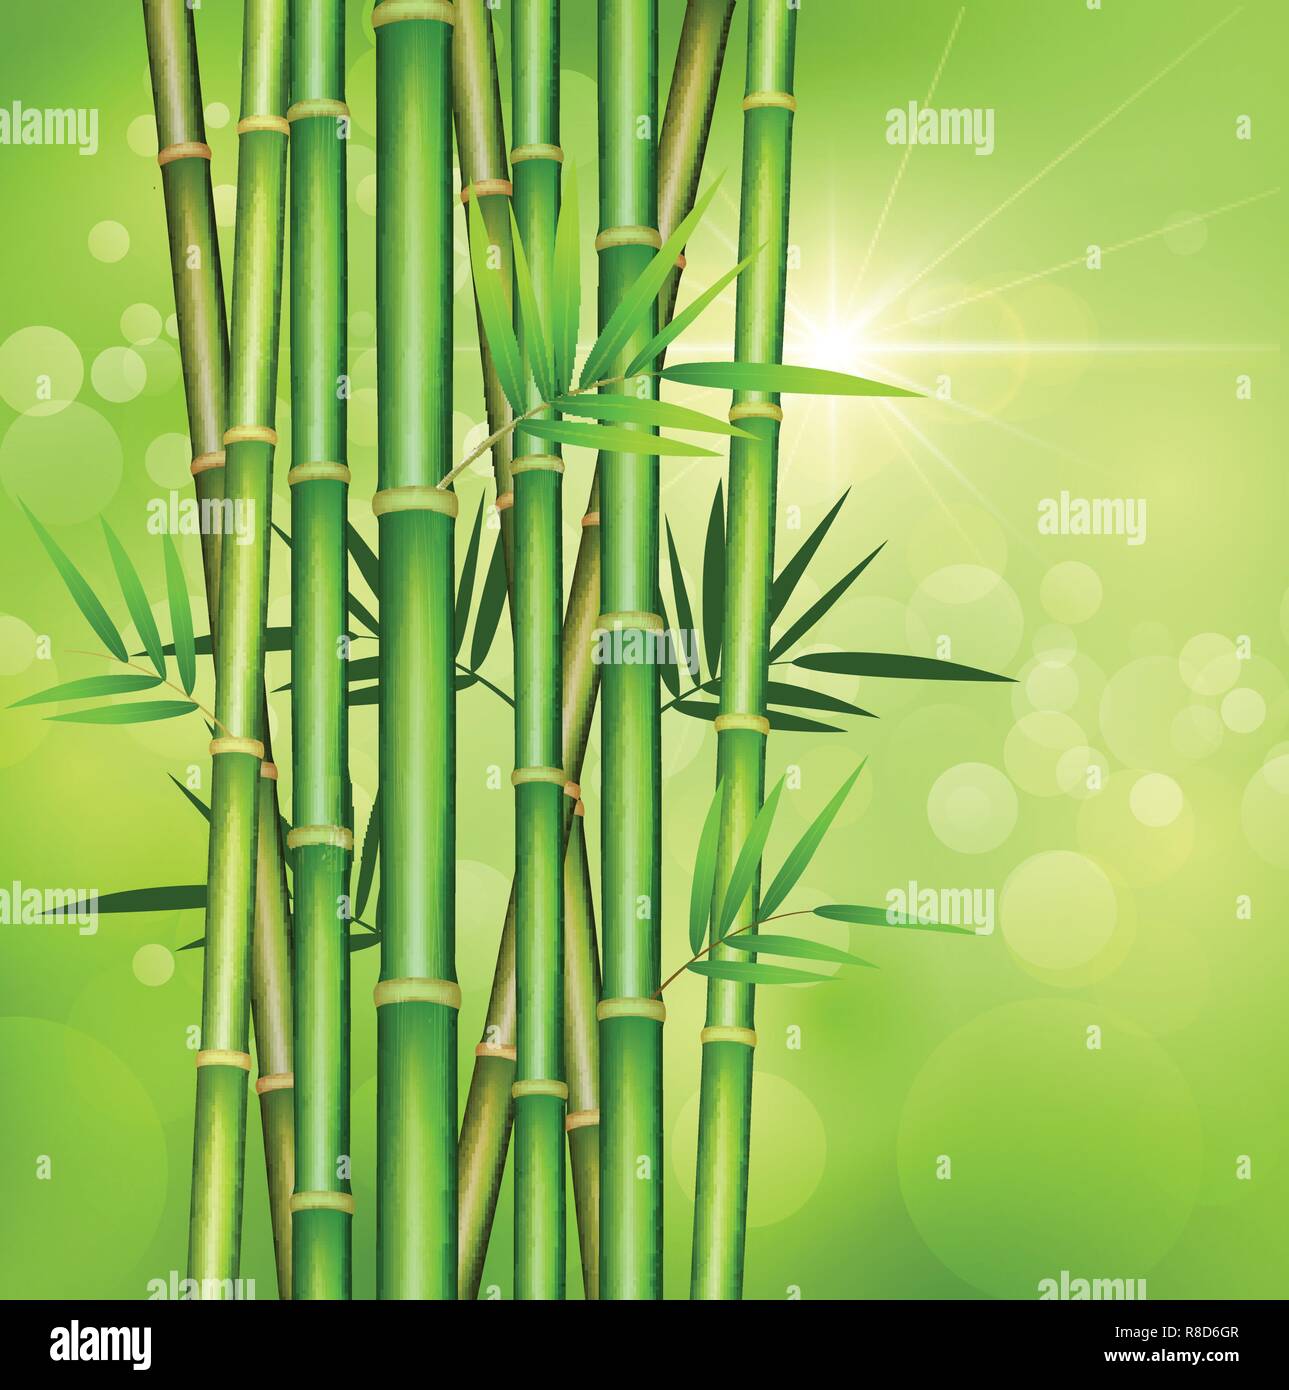 Bamboo stems in flat design illustration. Stock Vector